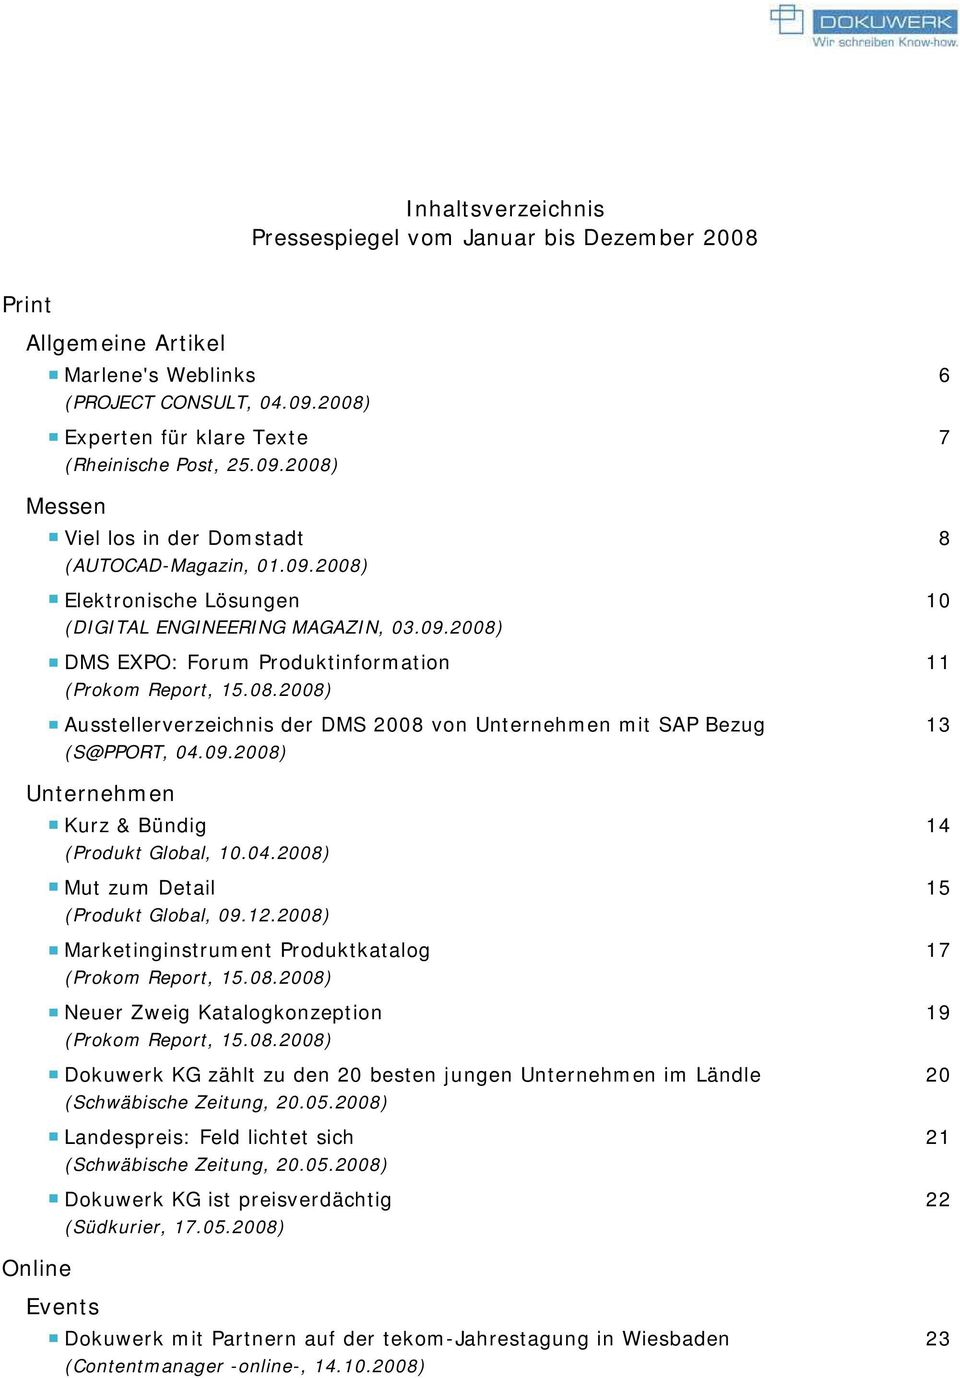 09.2008) Unternehmen Kurz & Bündig (Produkt Global, 10.04.2008) Mut zum Detail (Produkt Global, 09.12.2008) Marketinginstrument Produktkatalog (Prokom Report, 15.08.2008) Neuer Zweig Katalogkonzeption (Prokom Report, 15.